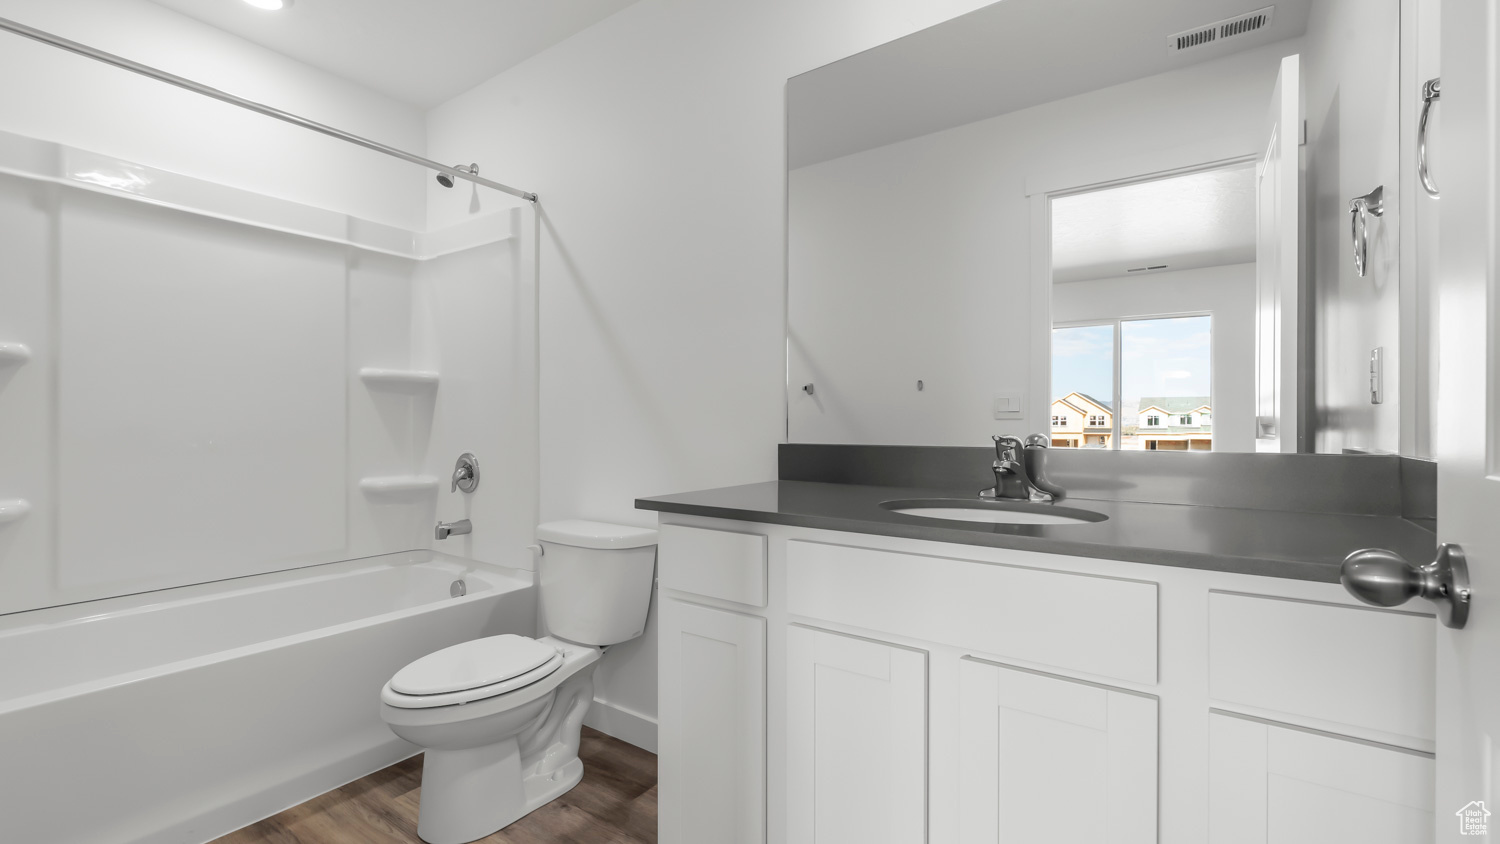 Full bathroom with hardwood / wood-style flooring, toilet, shower / washtub combination, and vanity